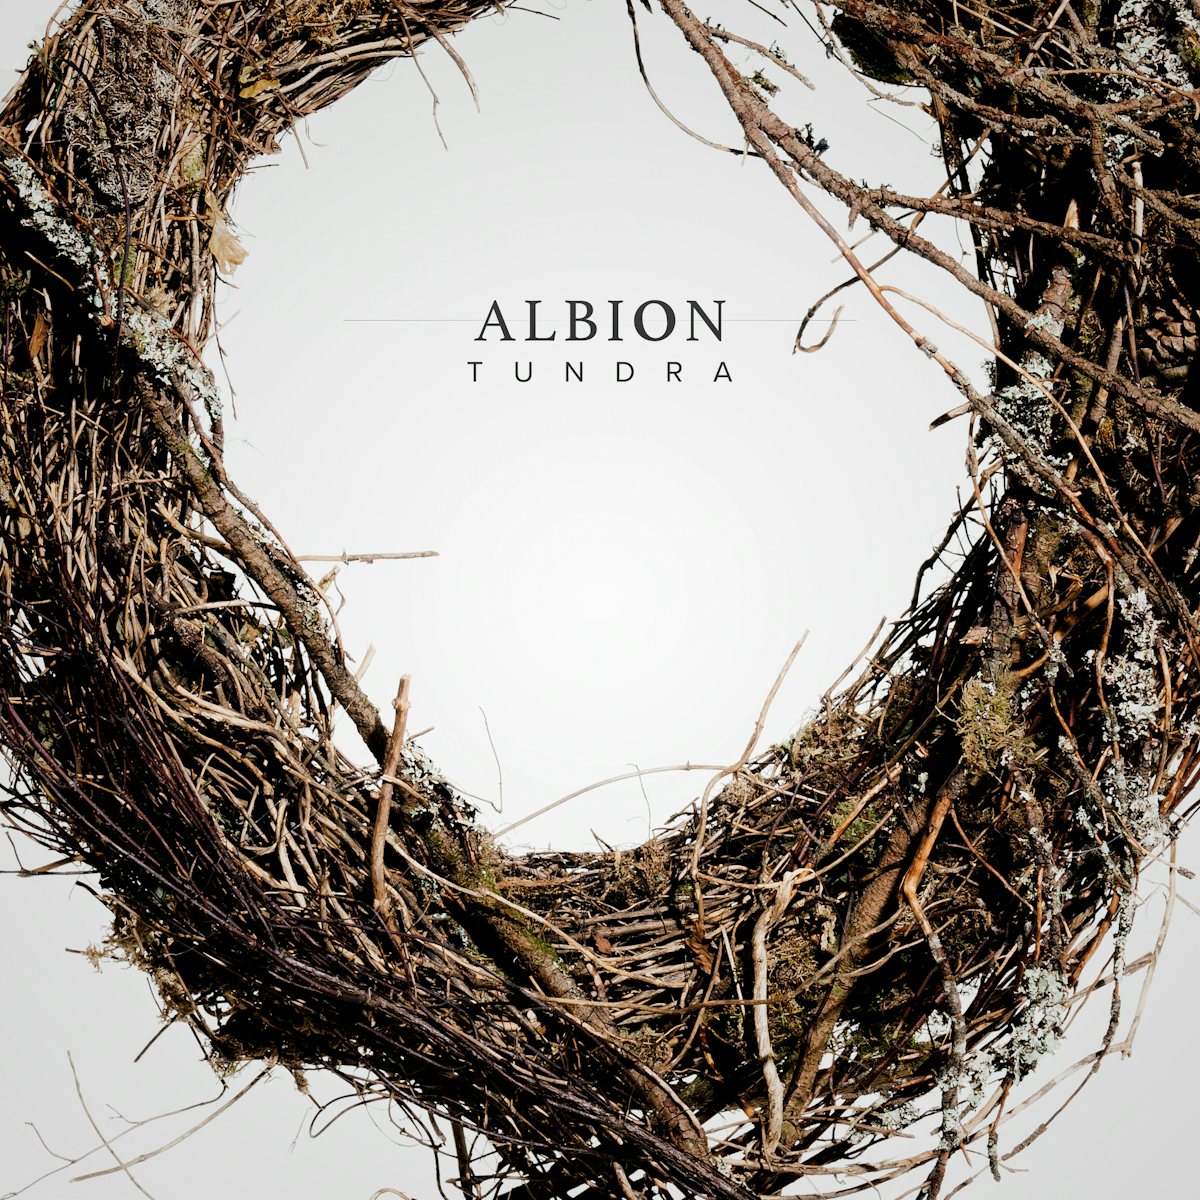 Albion Tundra product artwork